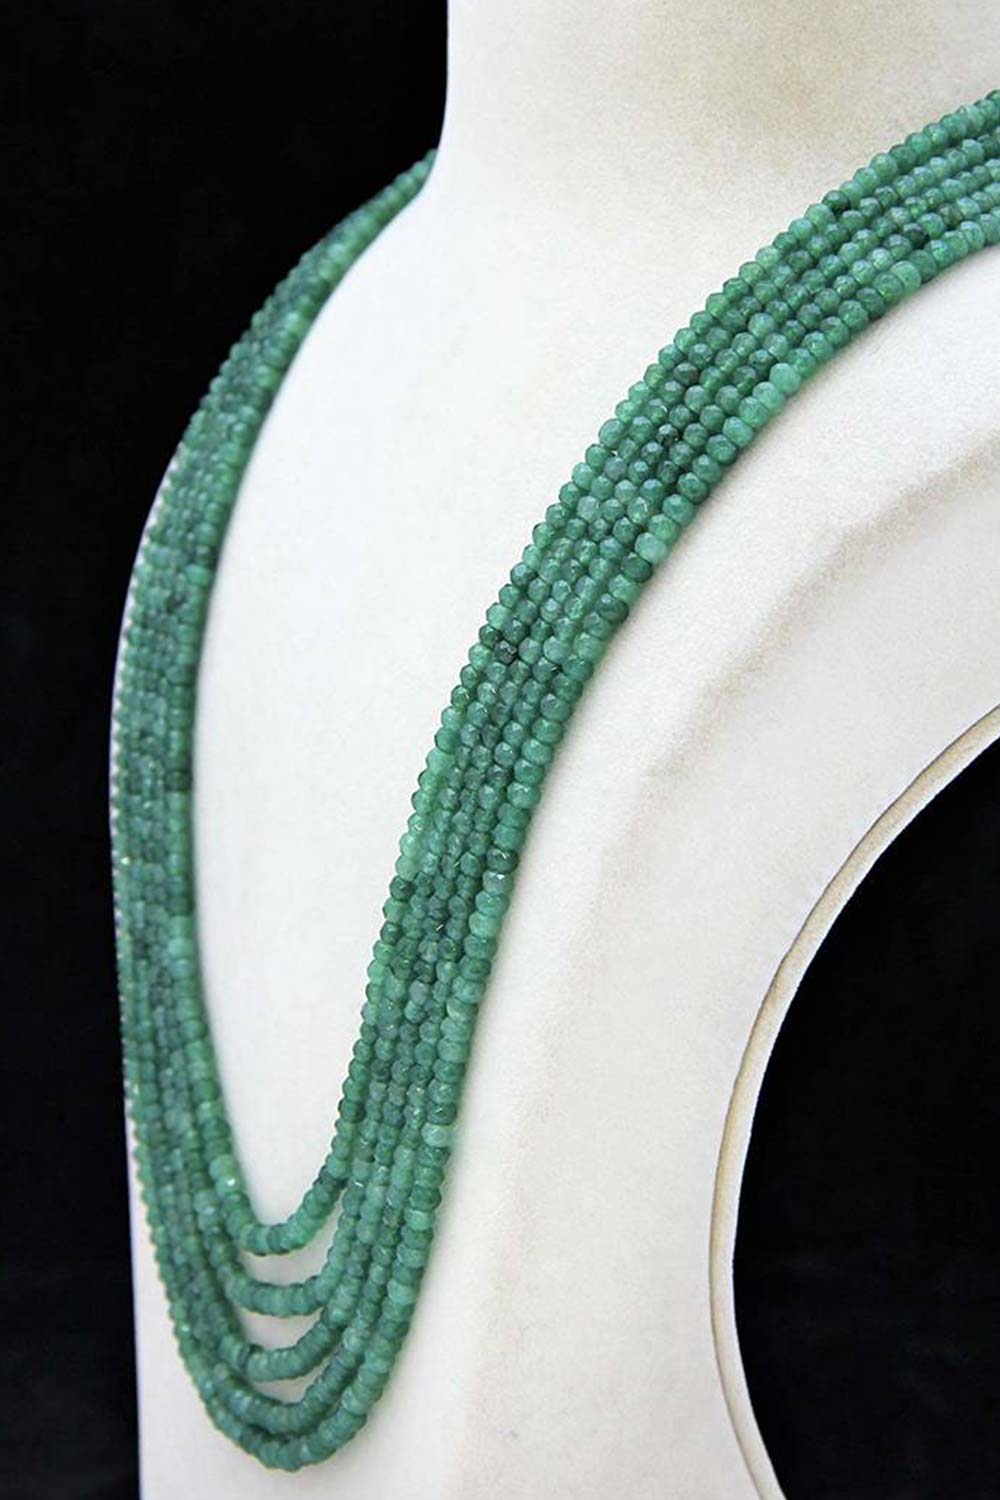 Green Semi Precious Onyx 5 Line Multilayer Beaded Necklace Set